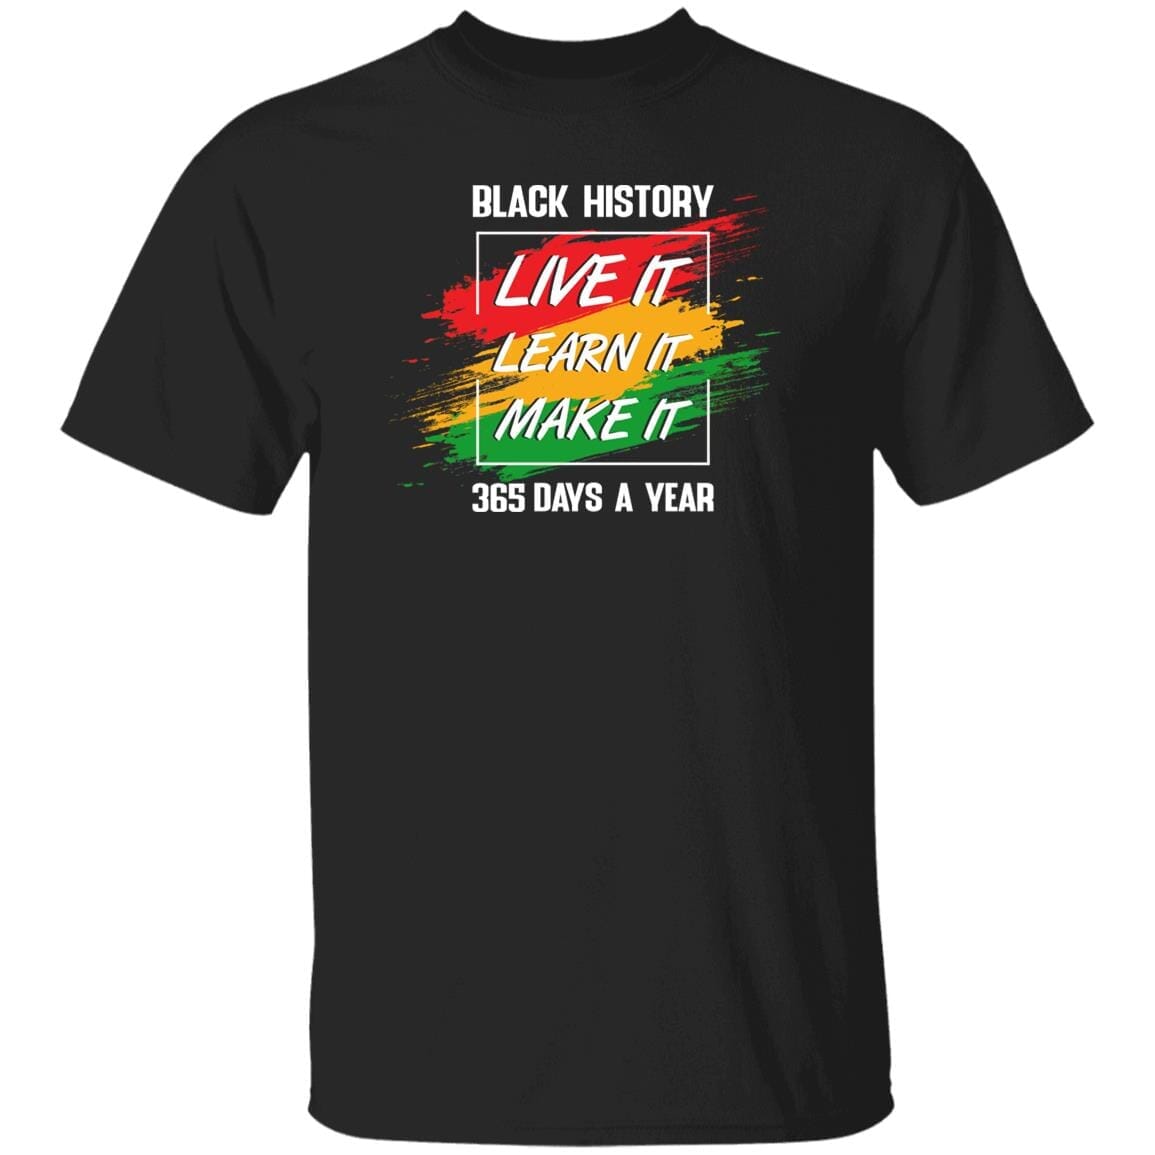 Black History Live It Learn It Make It T-shirt Apparel Gearment Unisex Tee Black S